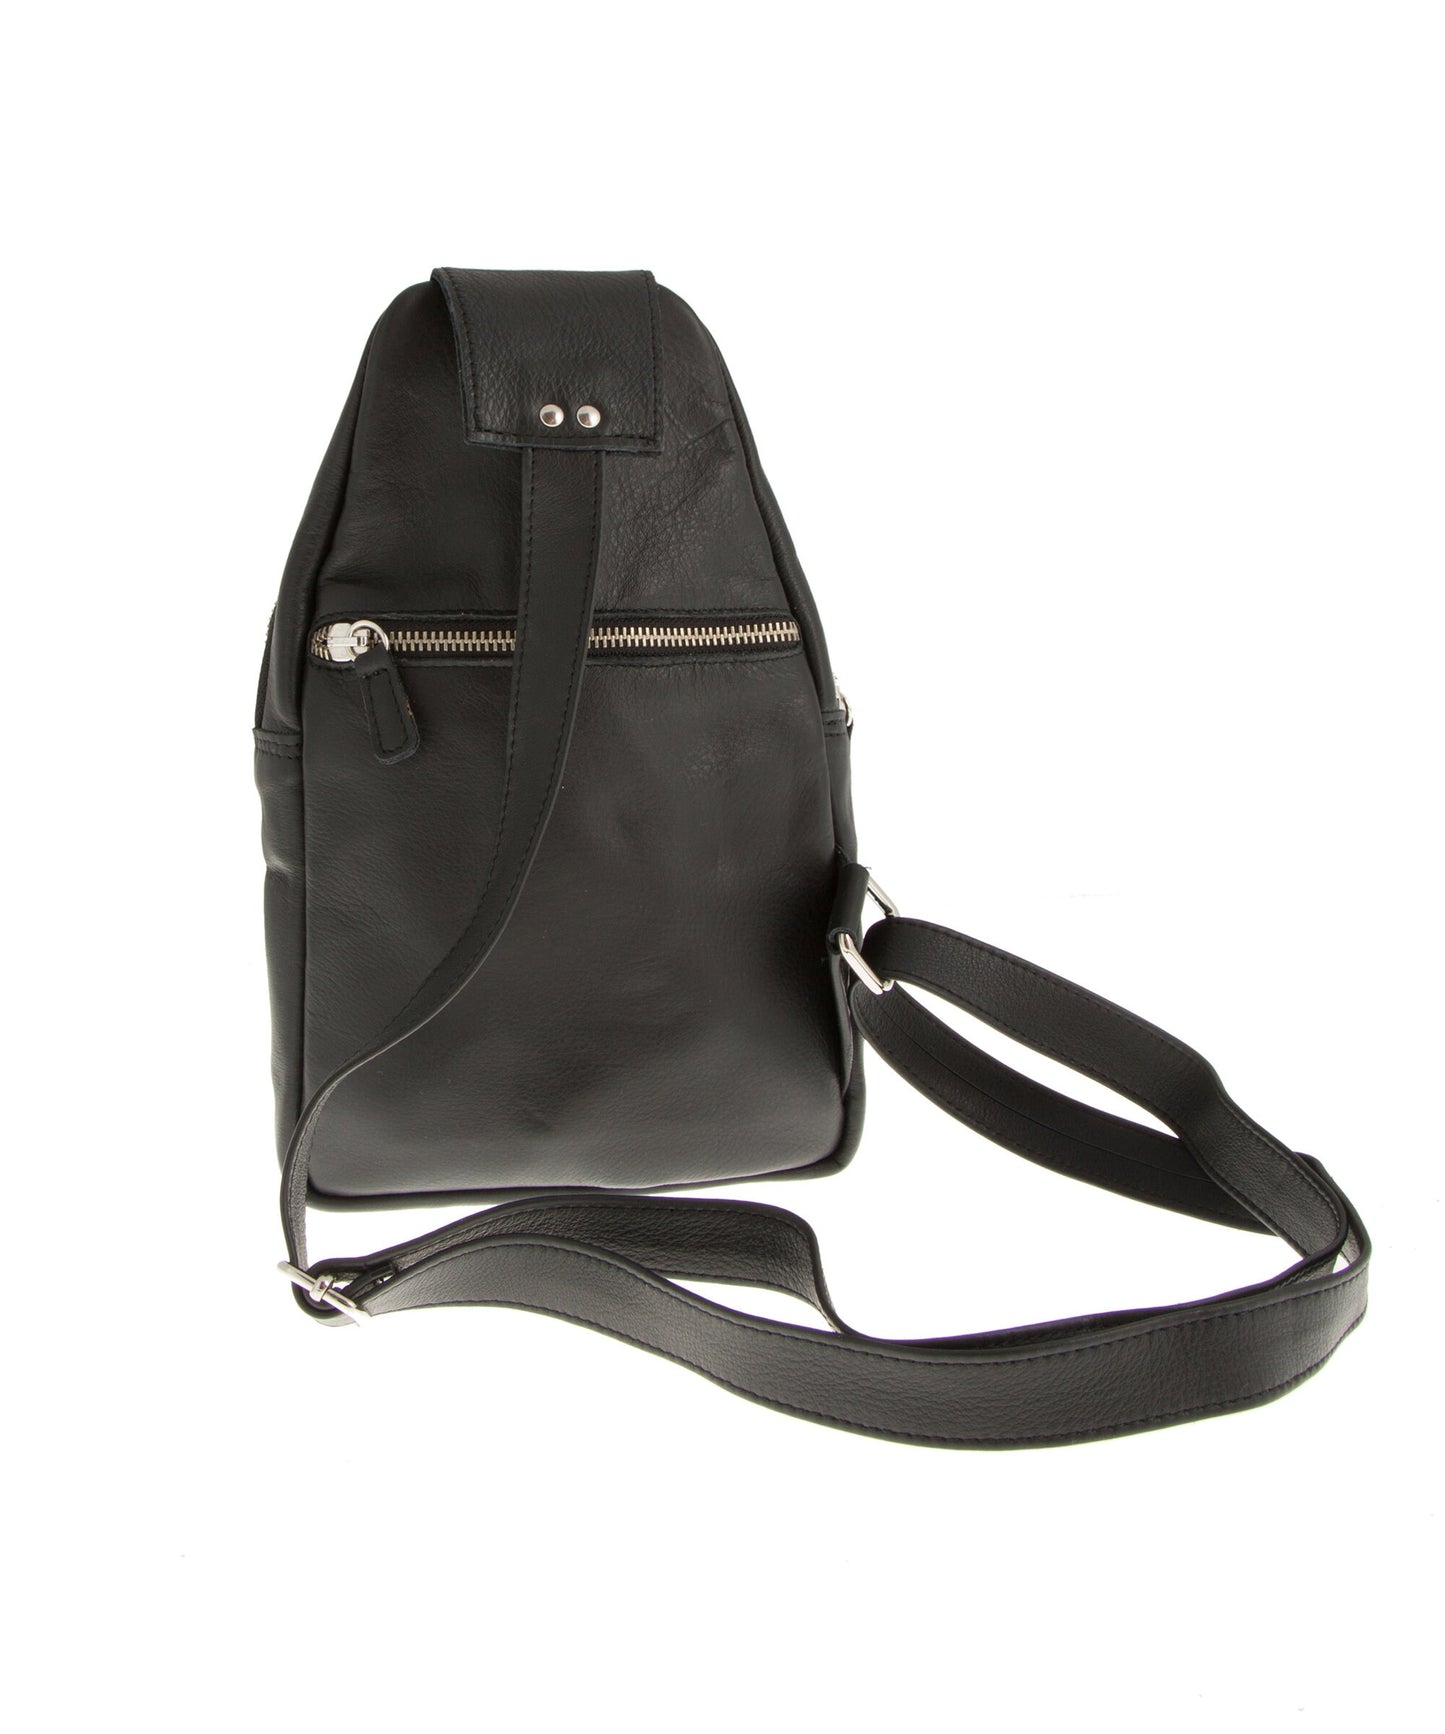 Mens leather bag, Crossbody mens leather sling bag, Mens leather shoulder bag, Travel Bag